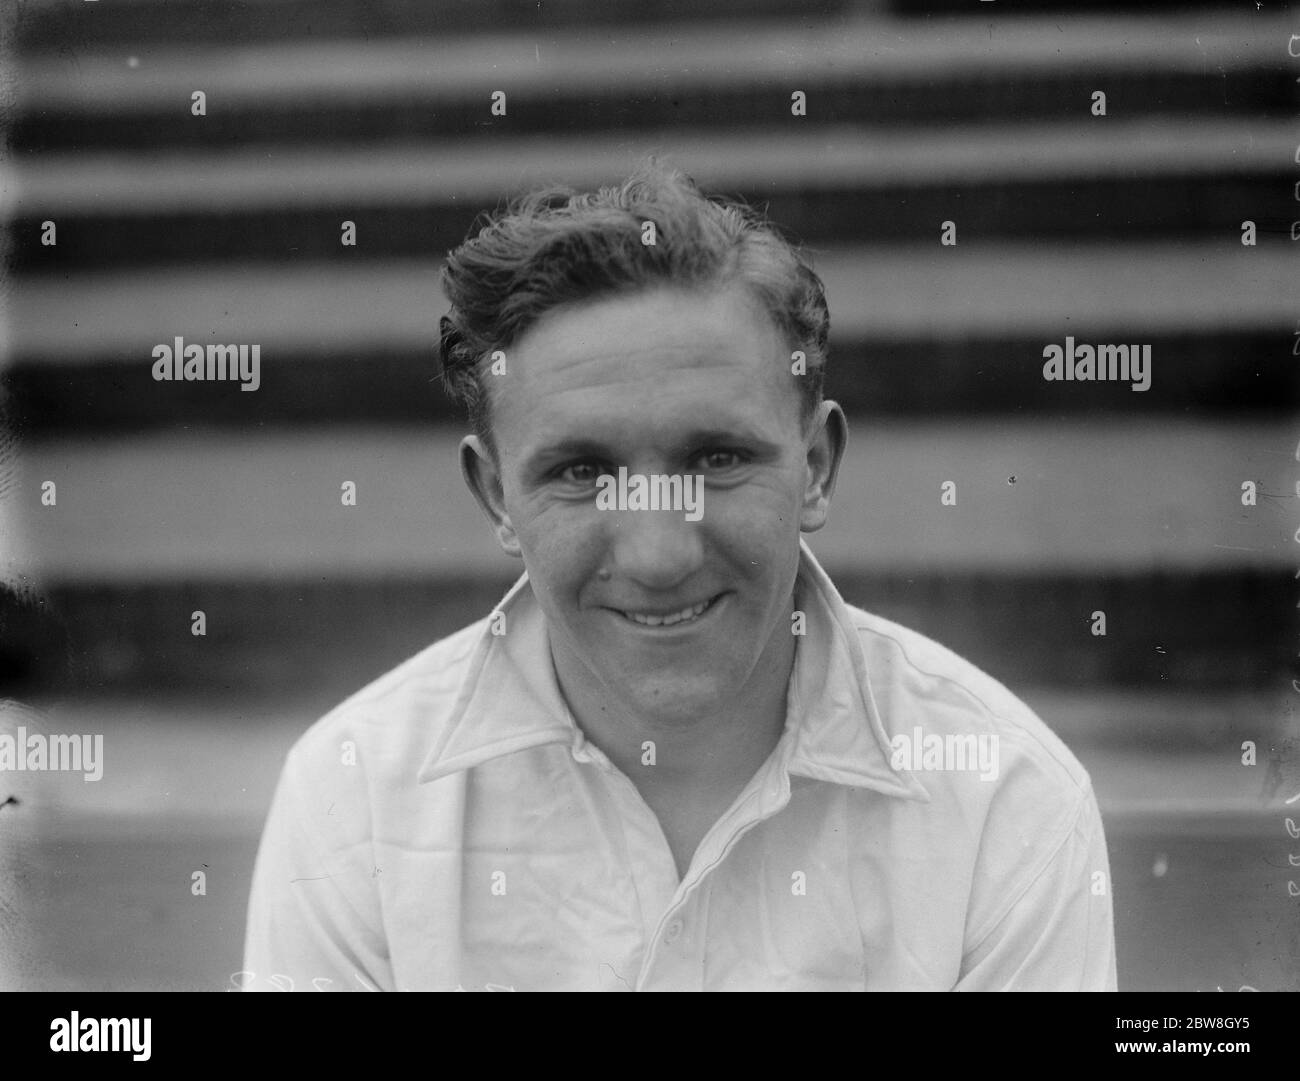 Jugadores del Club de Cricket del Condado de Surrey. McMurray - jugador de cricket de Surrey y futbolista de Transmere Rovers. 22 de abril de 1933 Foto de stock